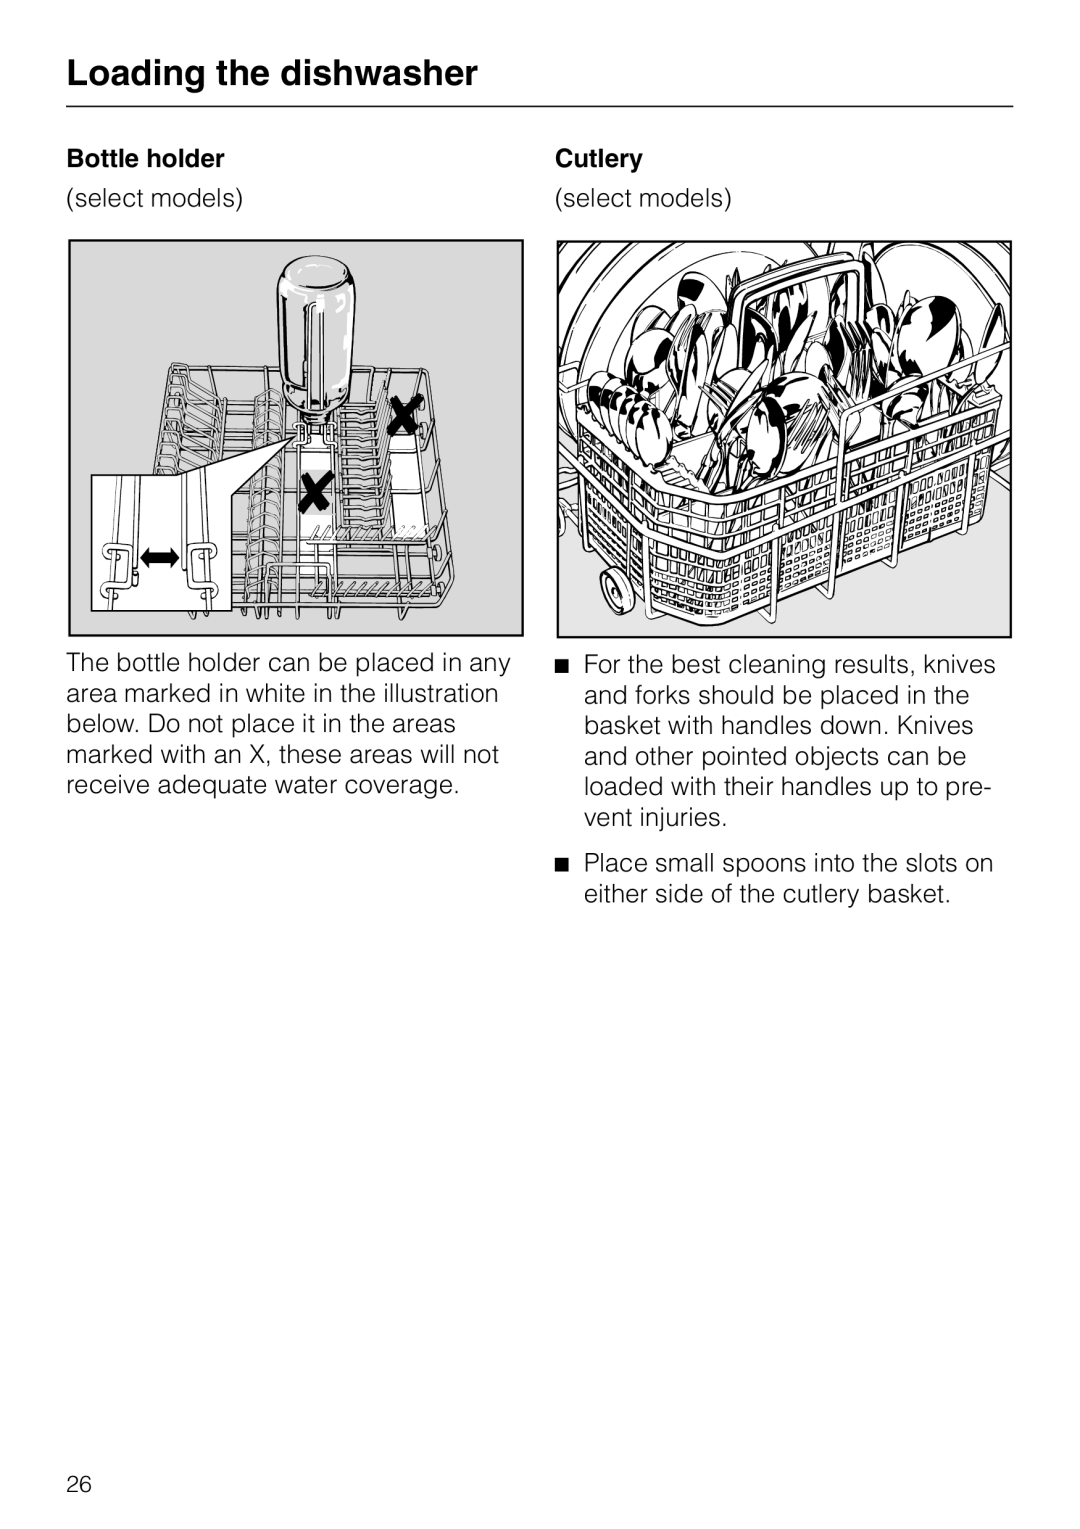 Miele G848 manual Loading the dishwasher, Bottle holder, Cutlery 